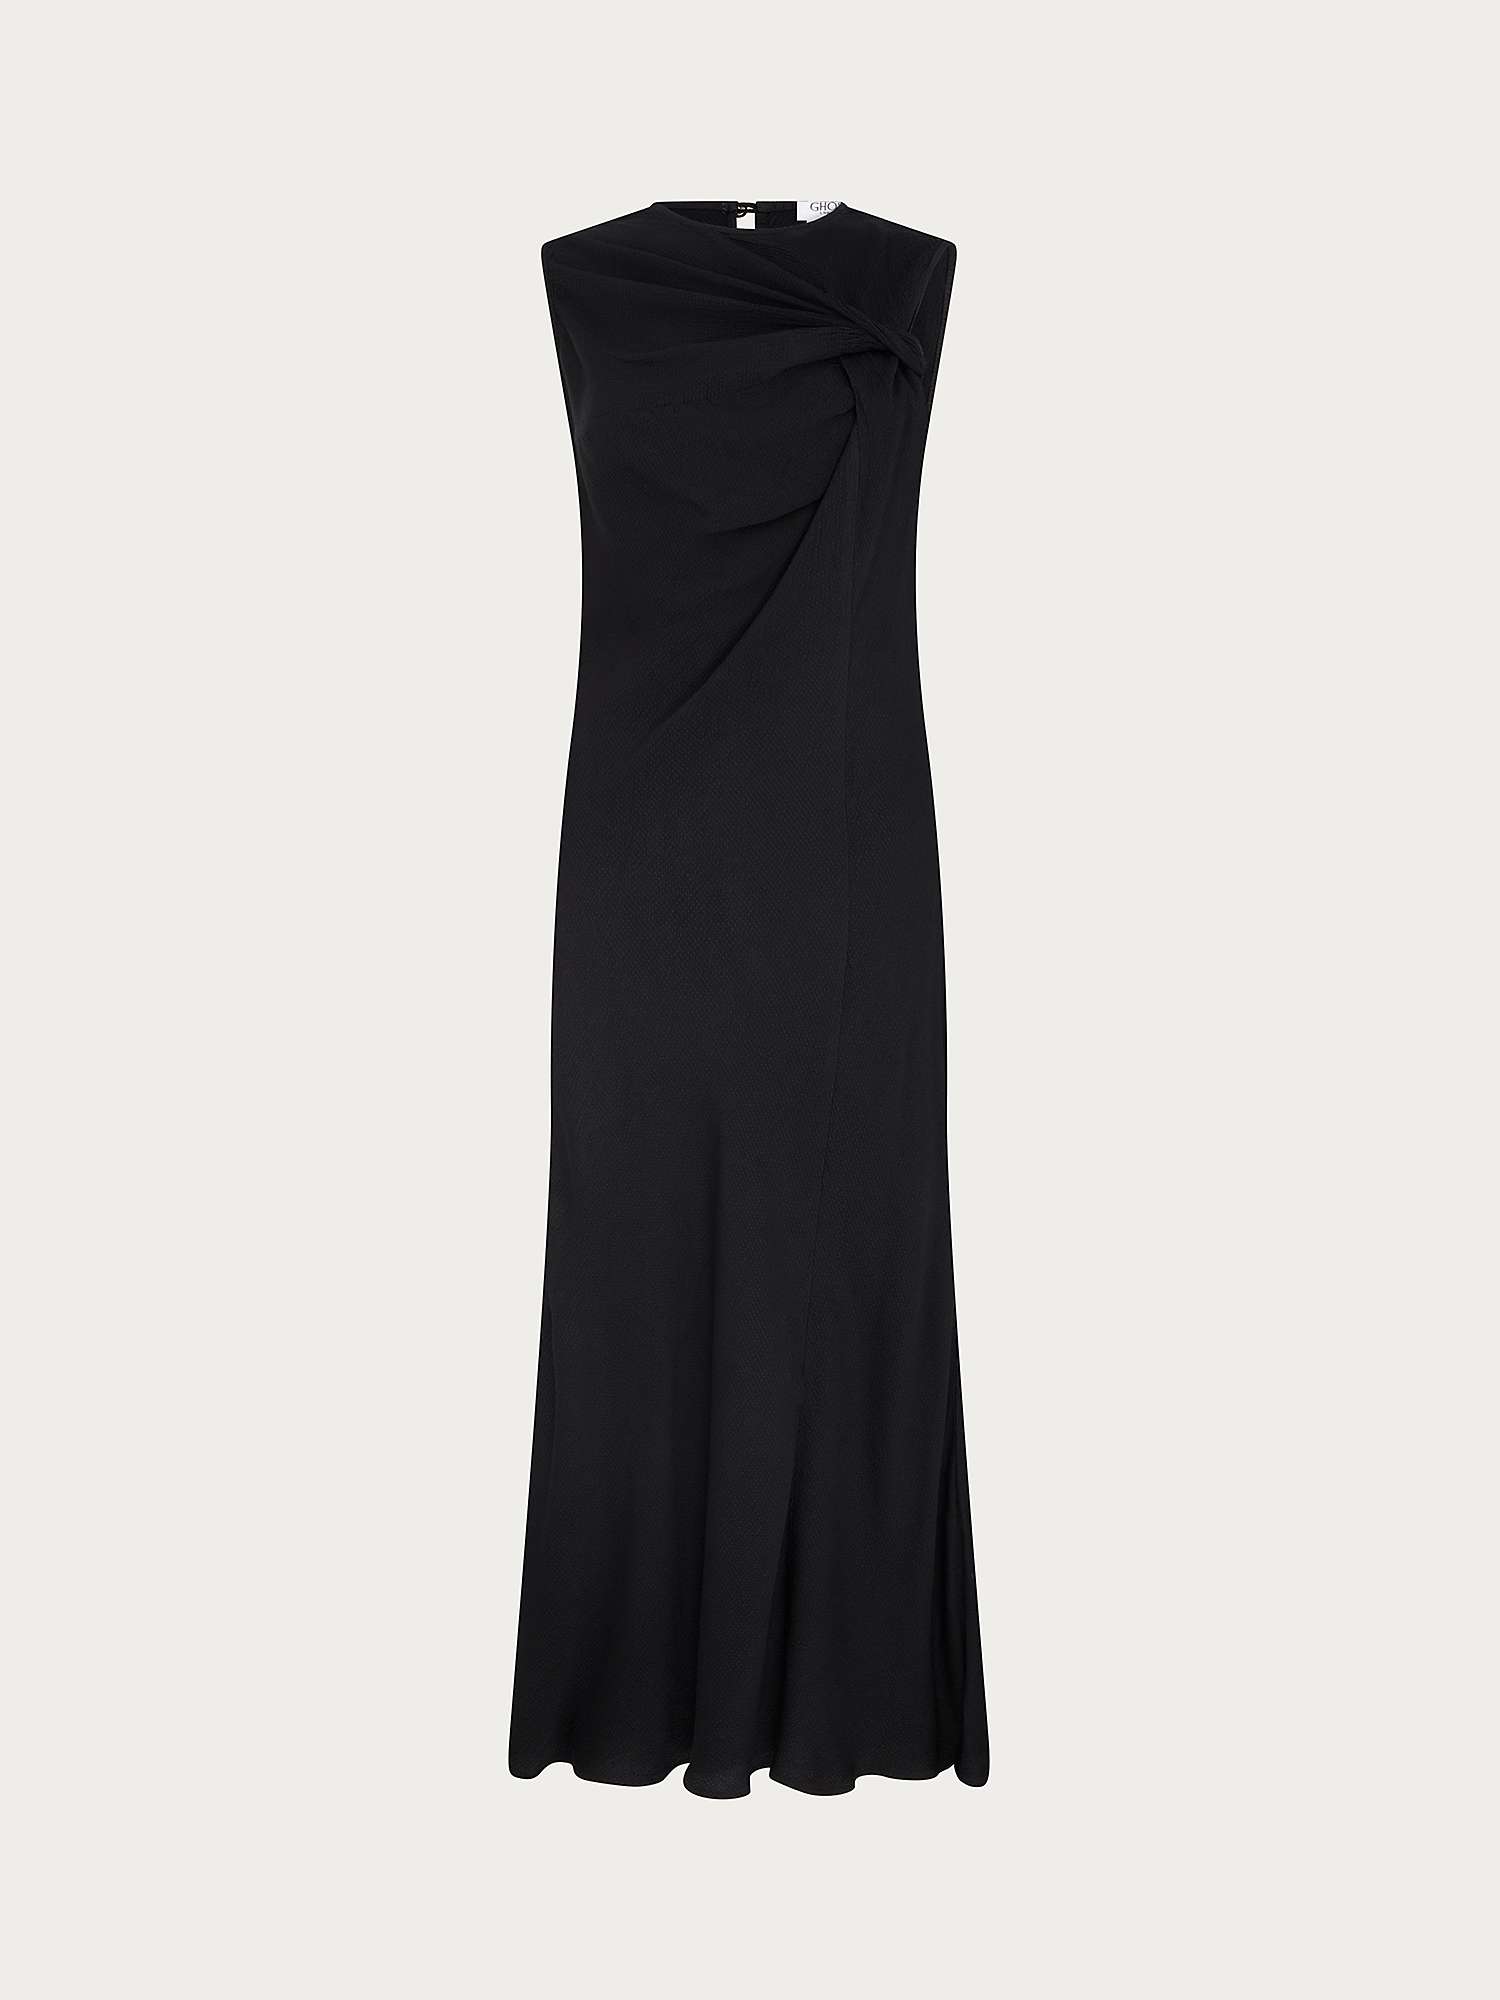 Ghost Naomi Midi Satin Dress, Black at John Lewis & Partners